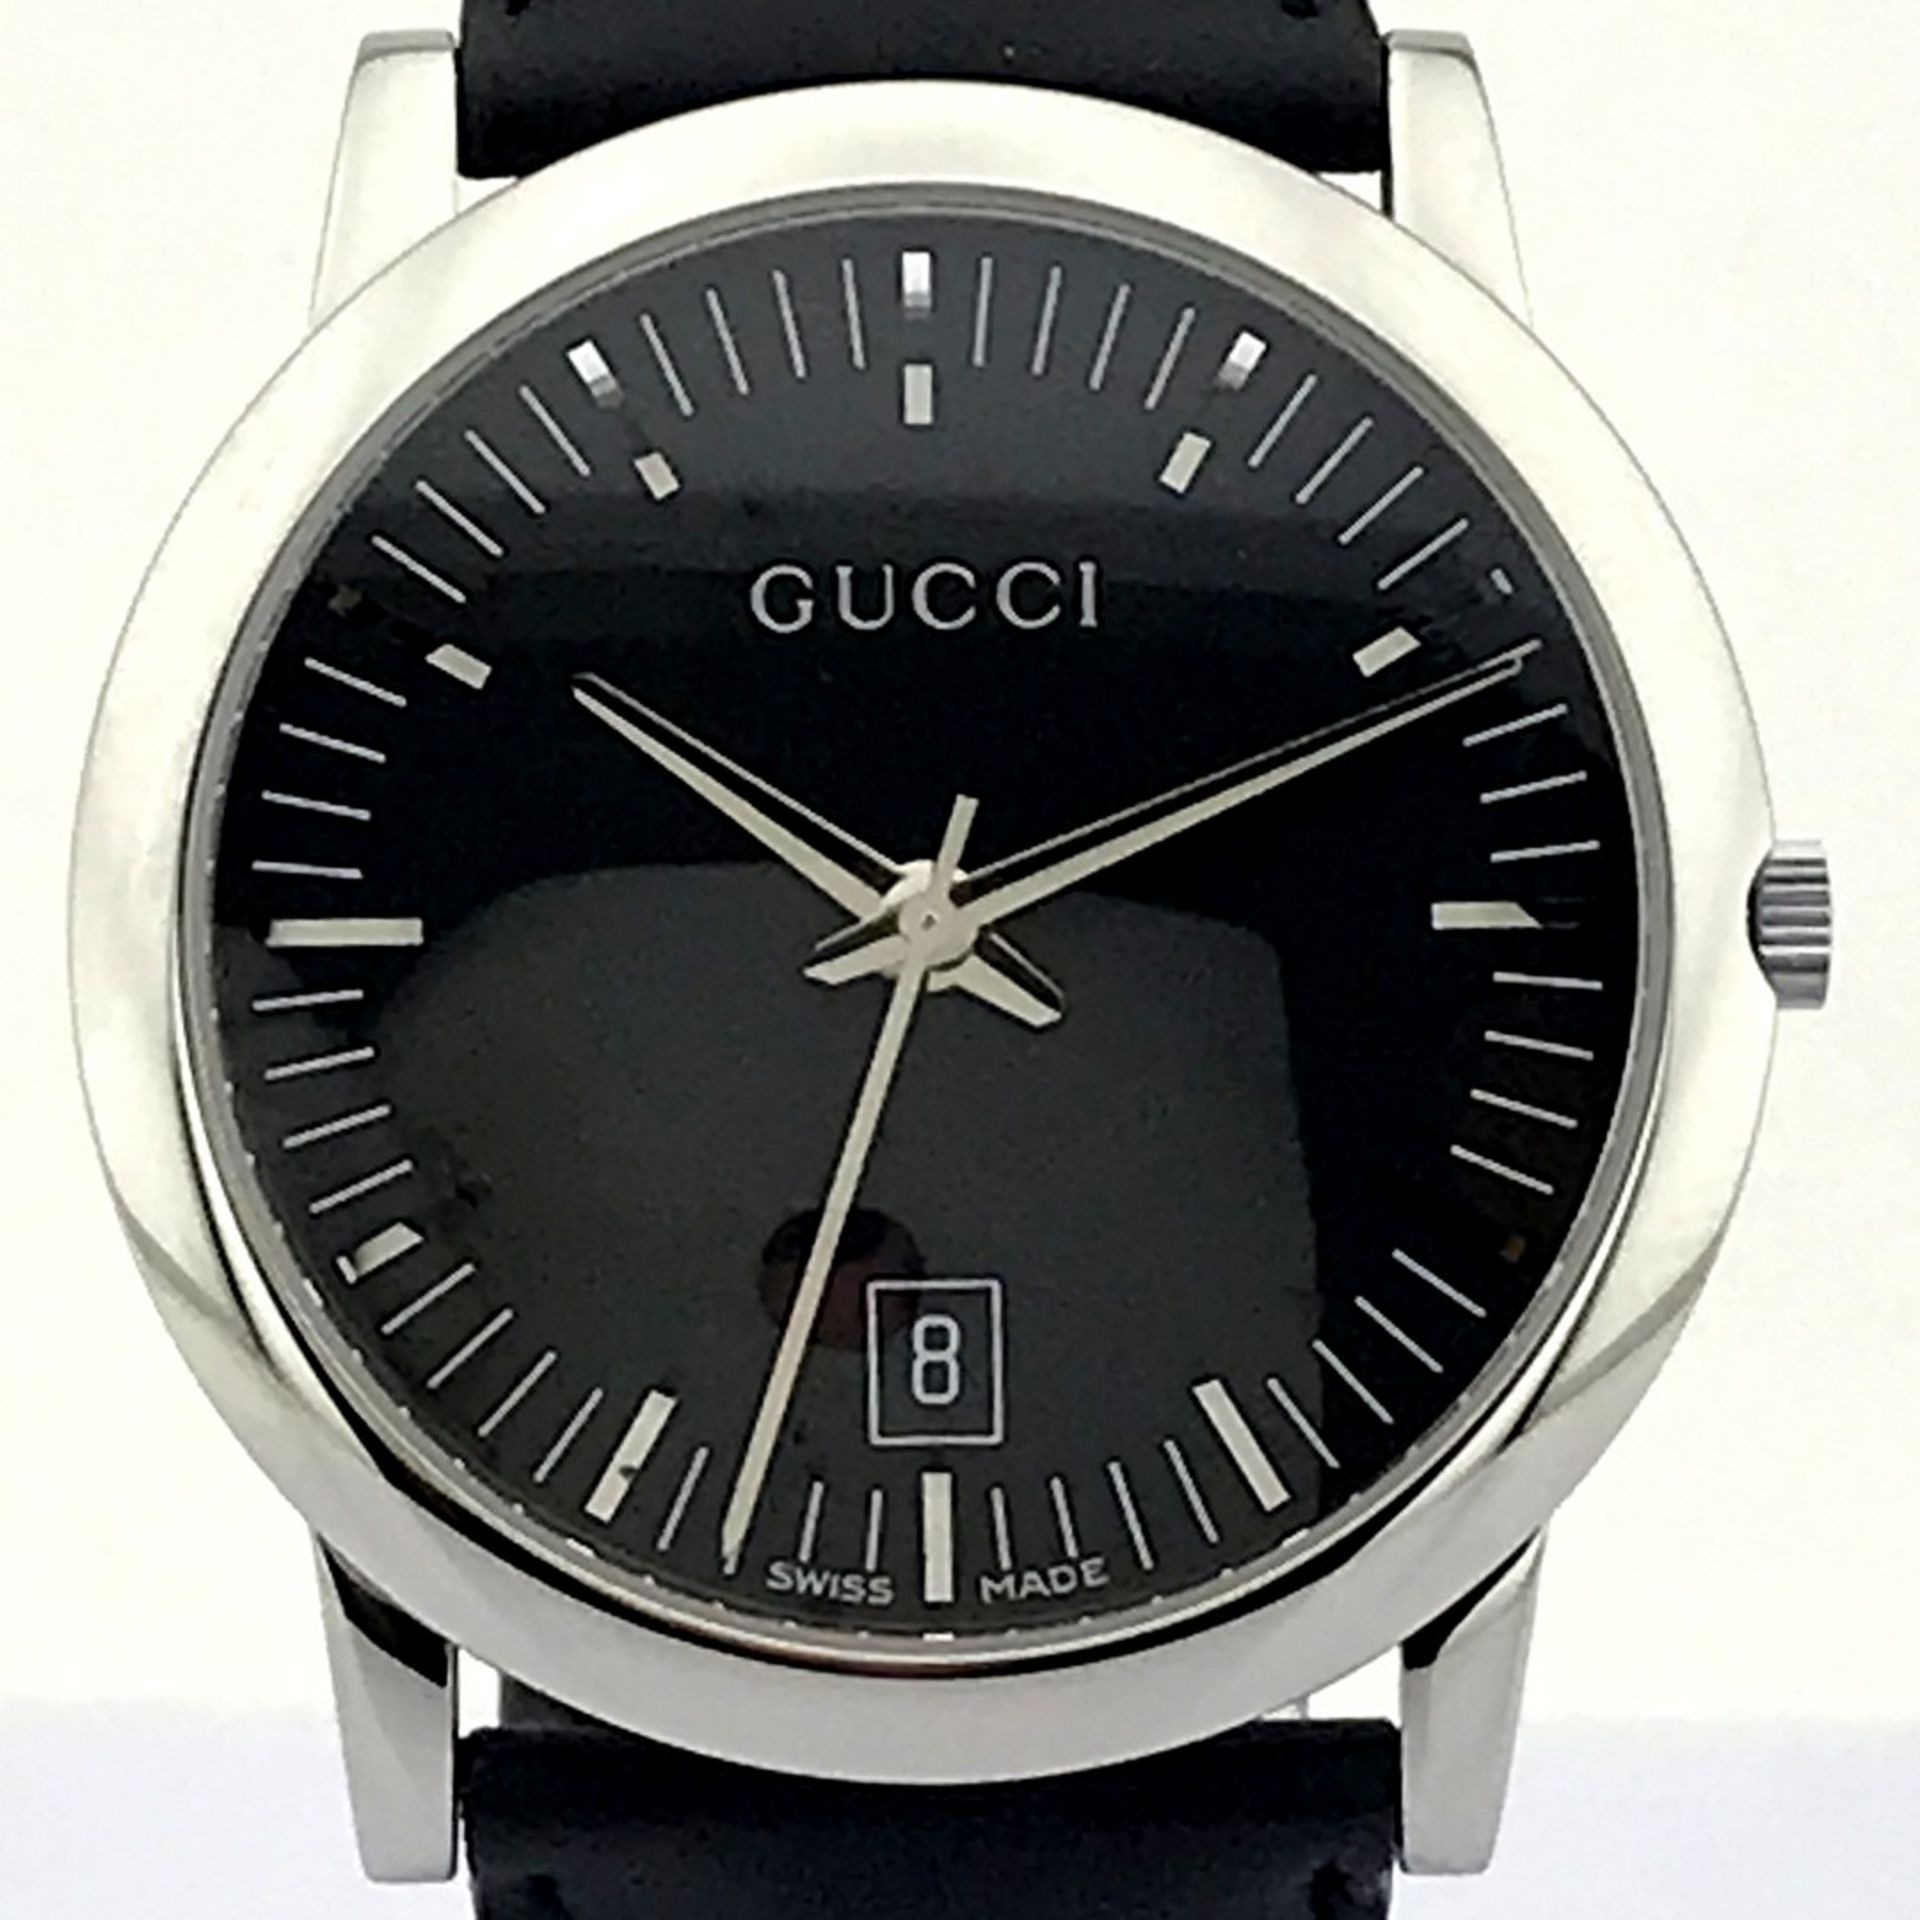 Gucci / 5600M - (Unworn) Gentlmen's Steel Wrist Watch - Image 8 of 9